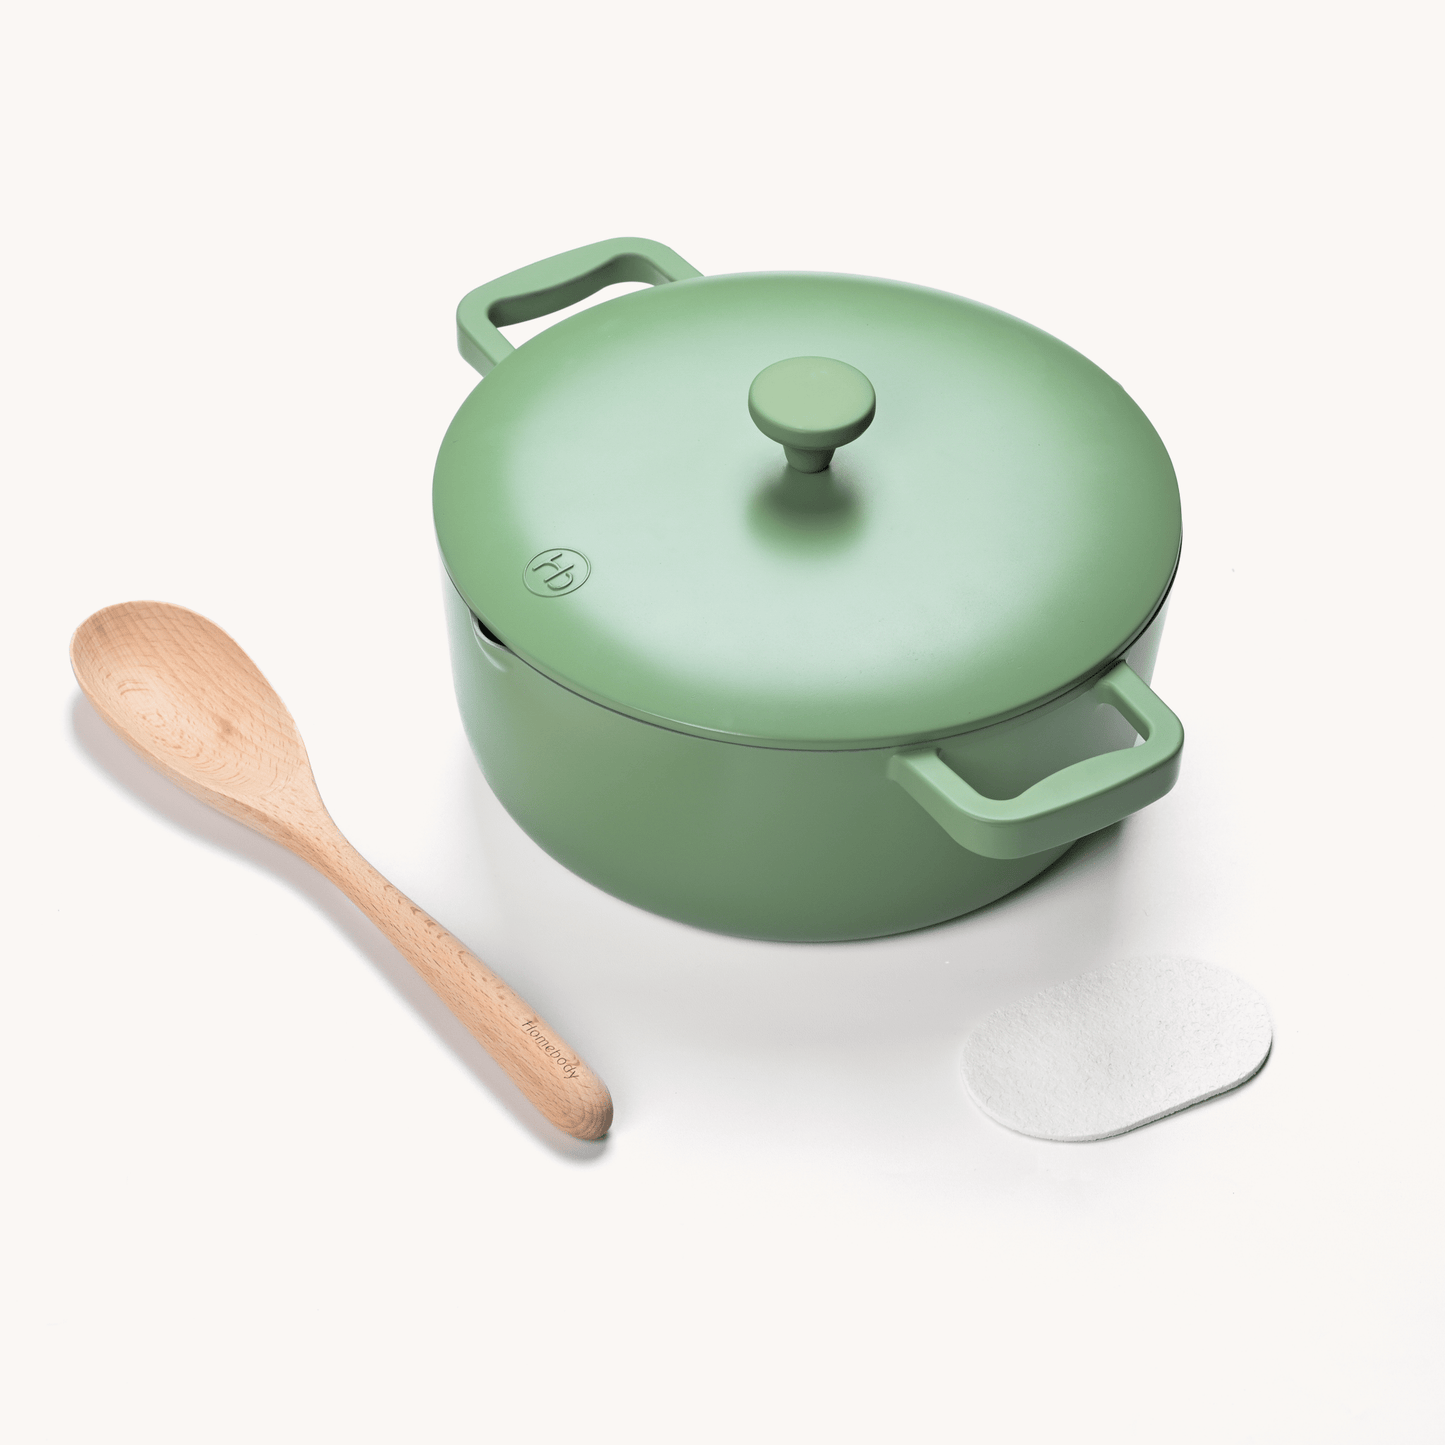 Super Pot - Homebody | Ceramic Non-stick cookware | No PFOA, PTFE